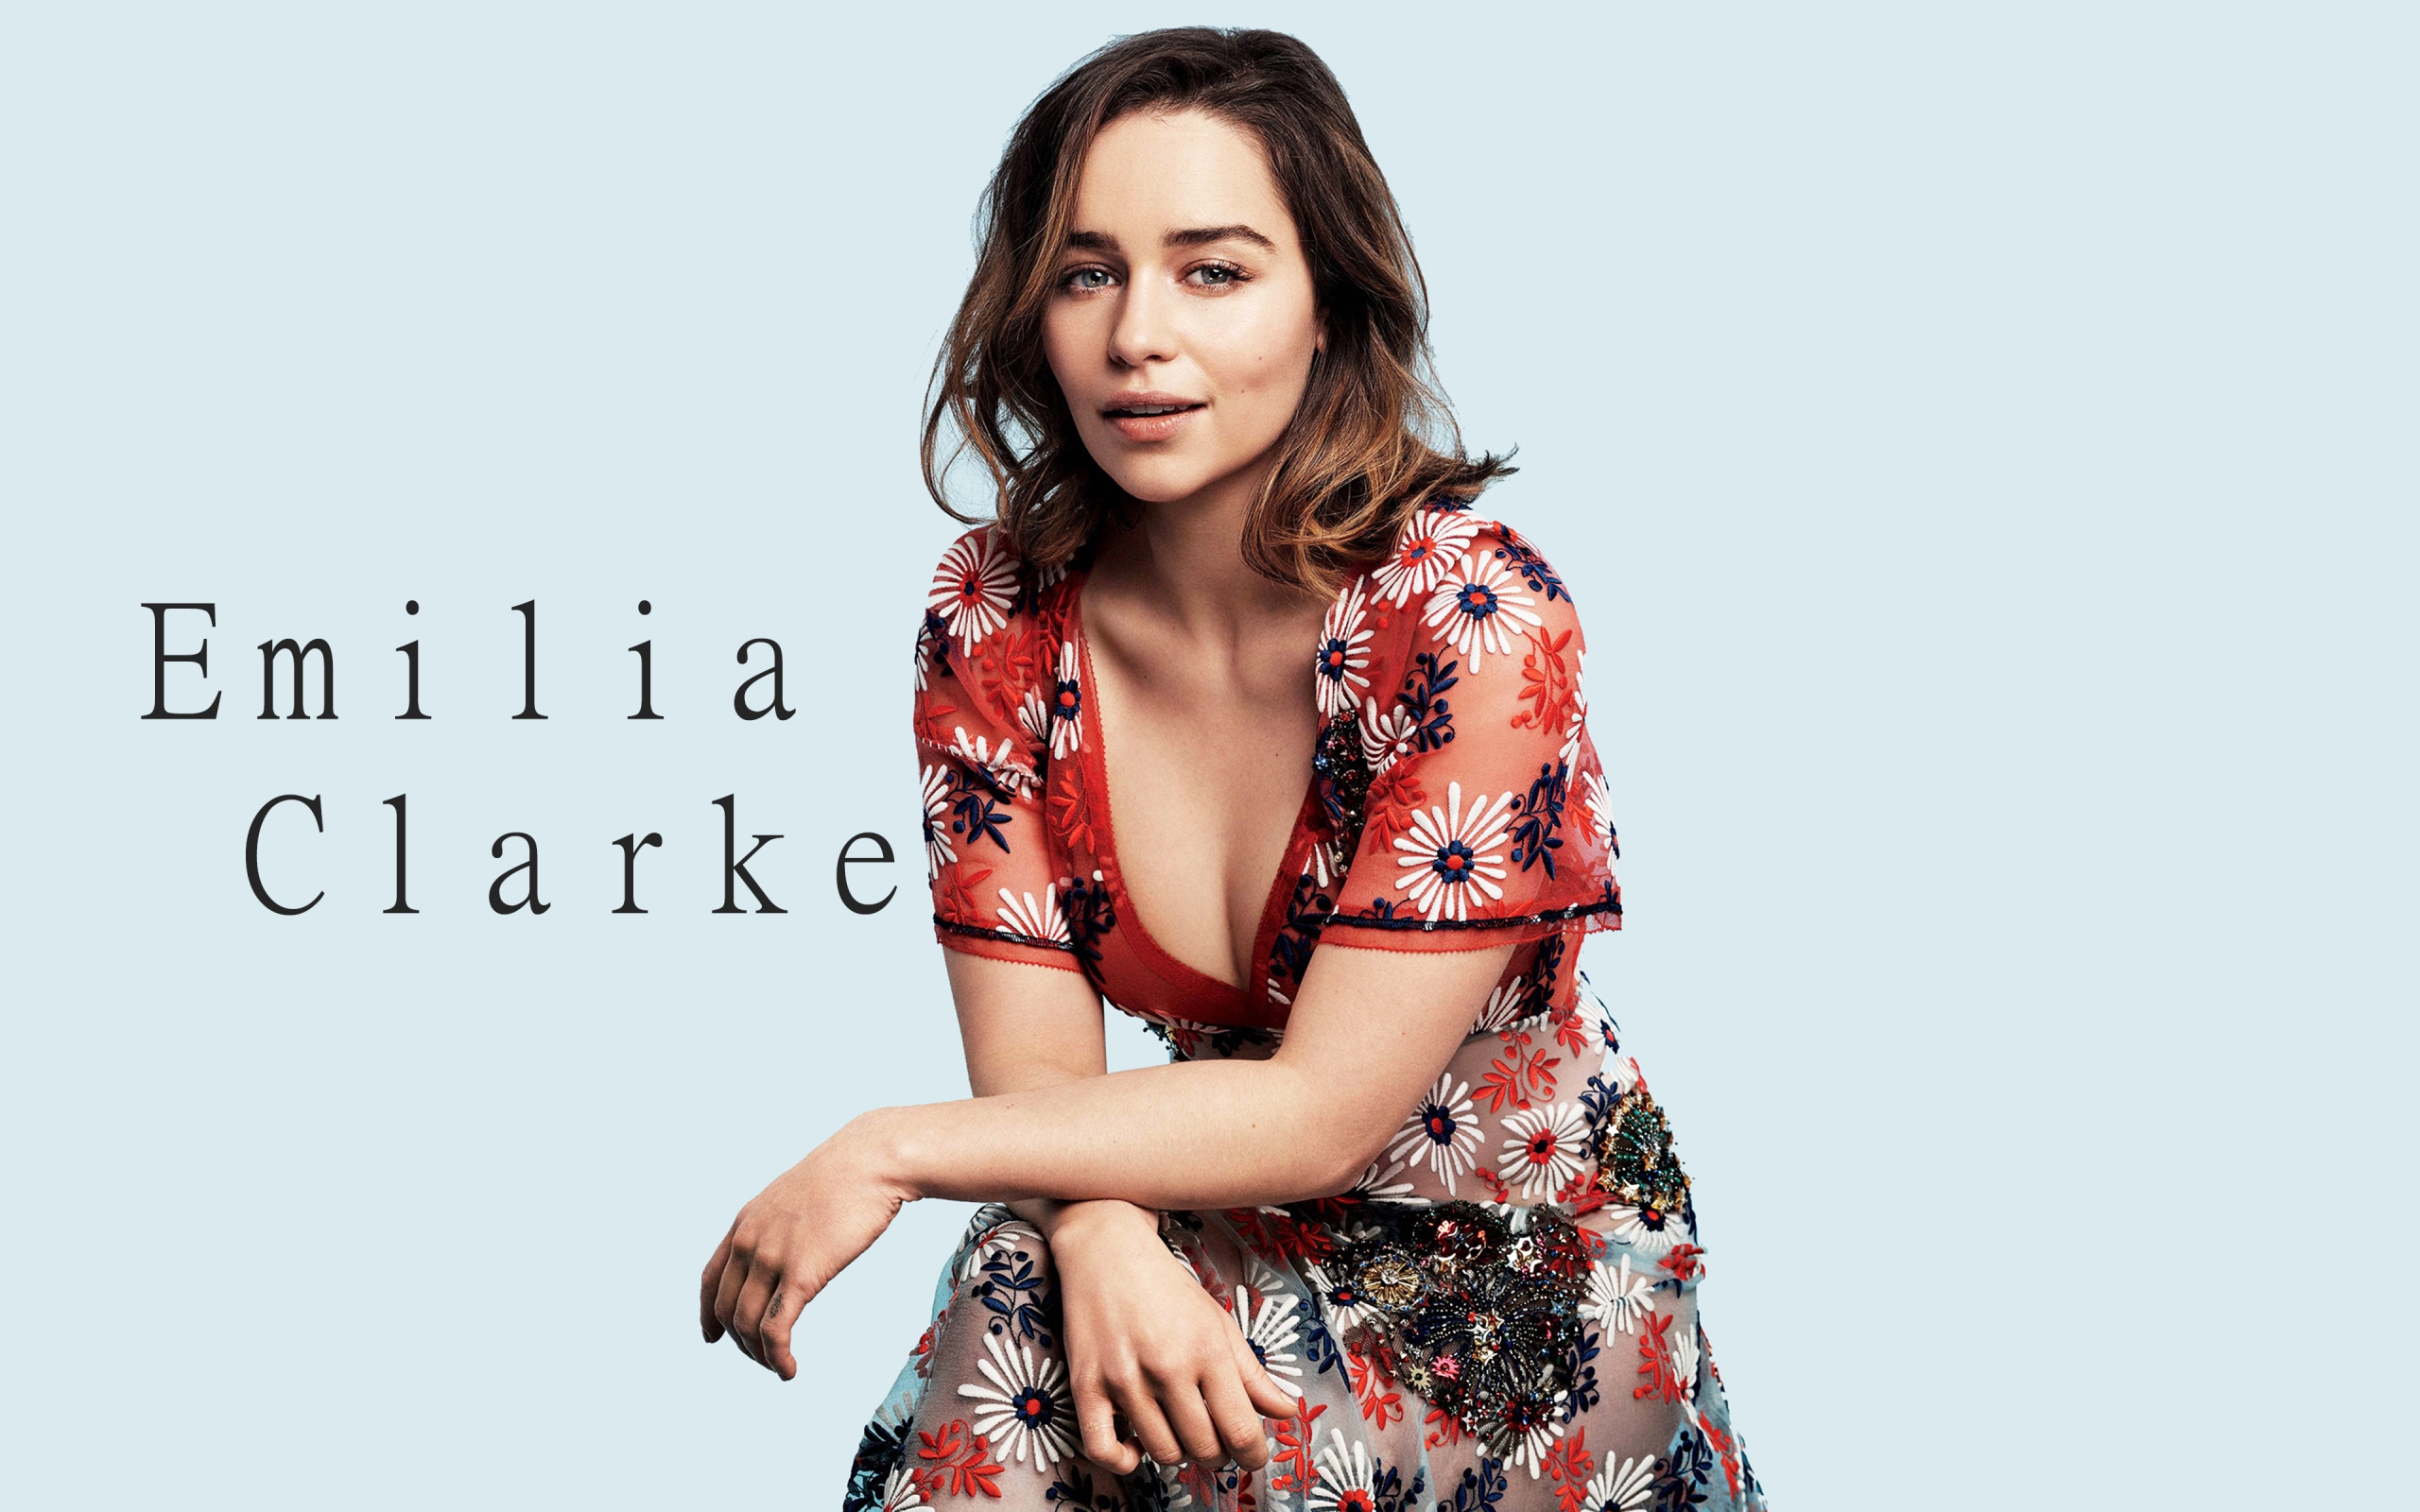 Emilia Clarke 2017 for 2560 x 1600 widescreen resolution